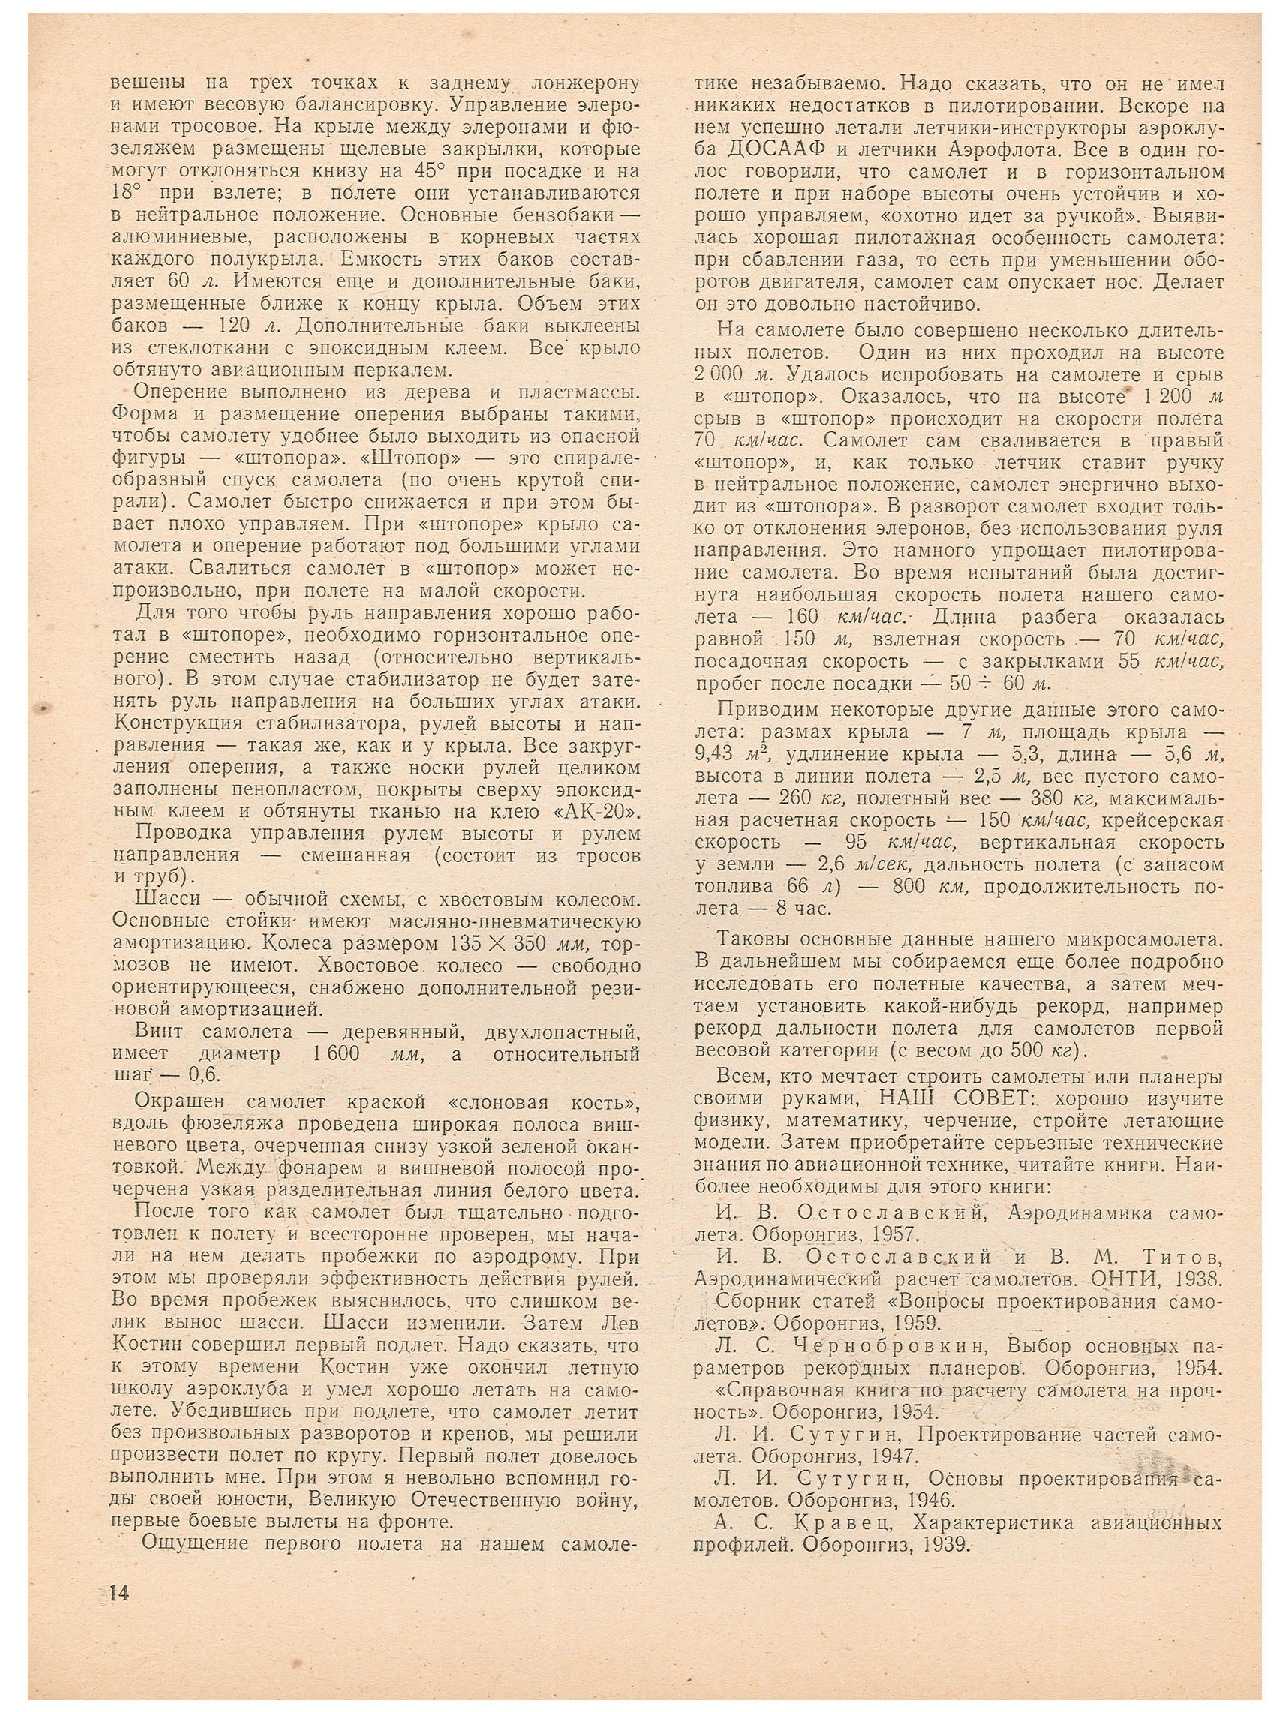 ЮМК 7, 1964, 14 c.